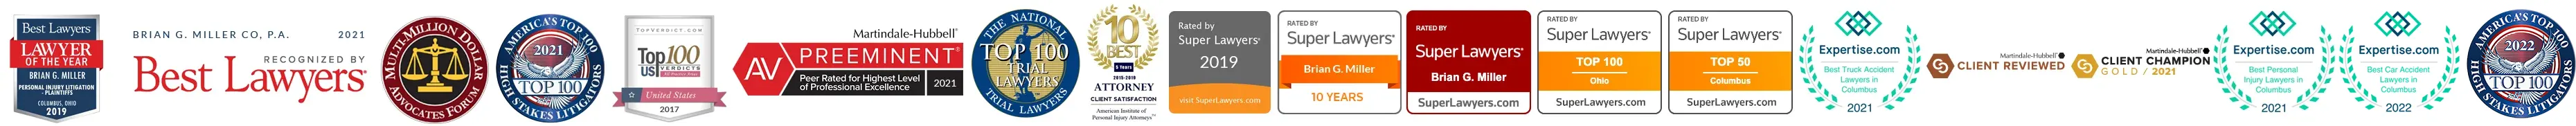 Super Lawyers Top 100 - Ohio